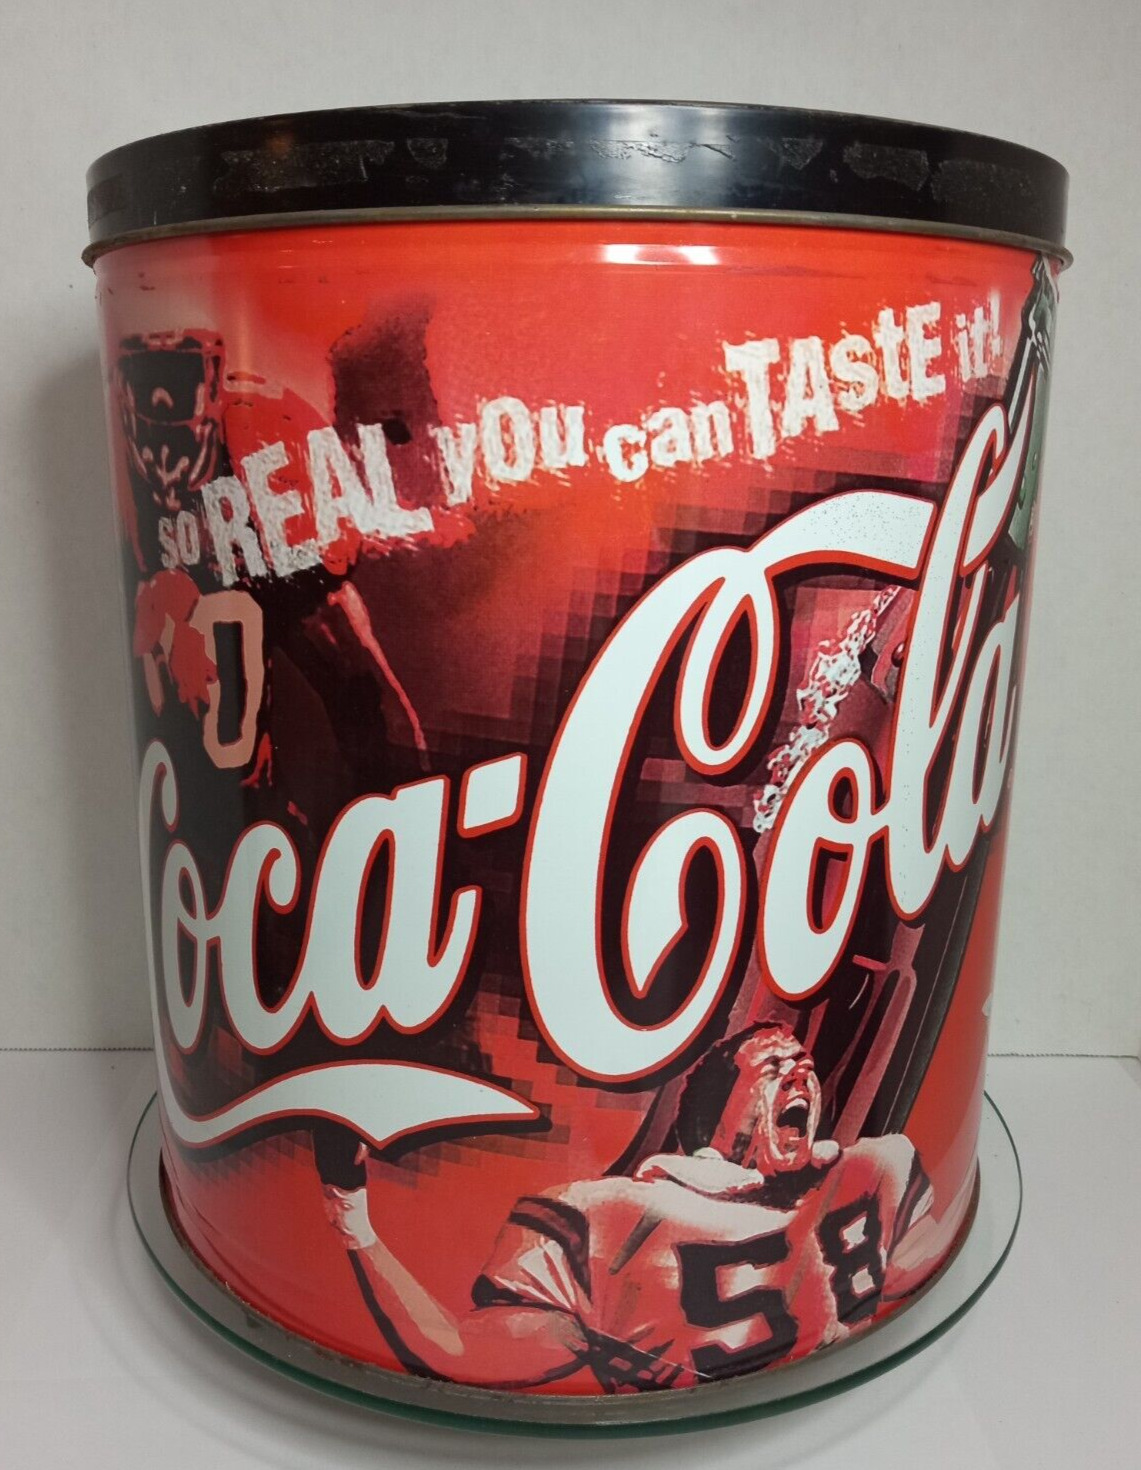 Vintage Coca Cola Popcorn Tin Football Coke Collectible So Real You Can Taste It